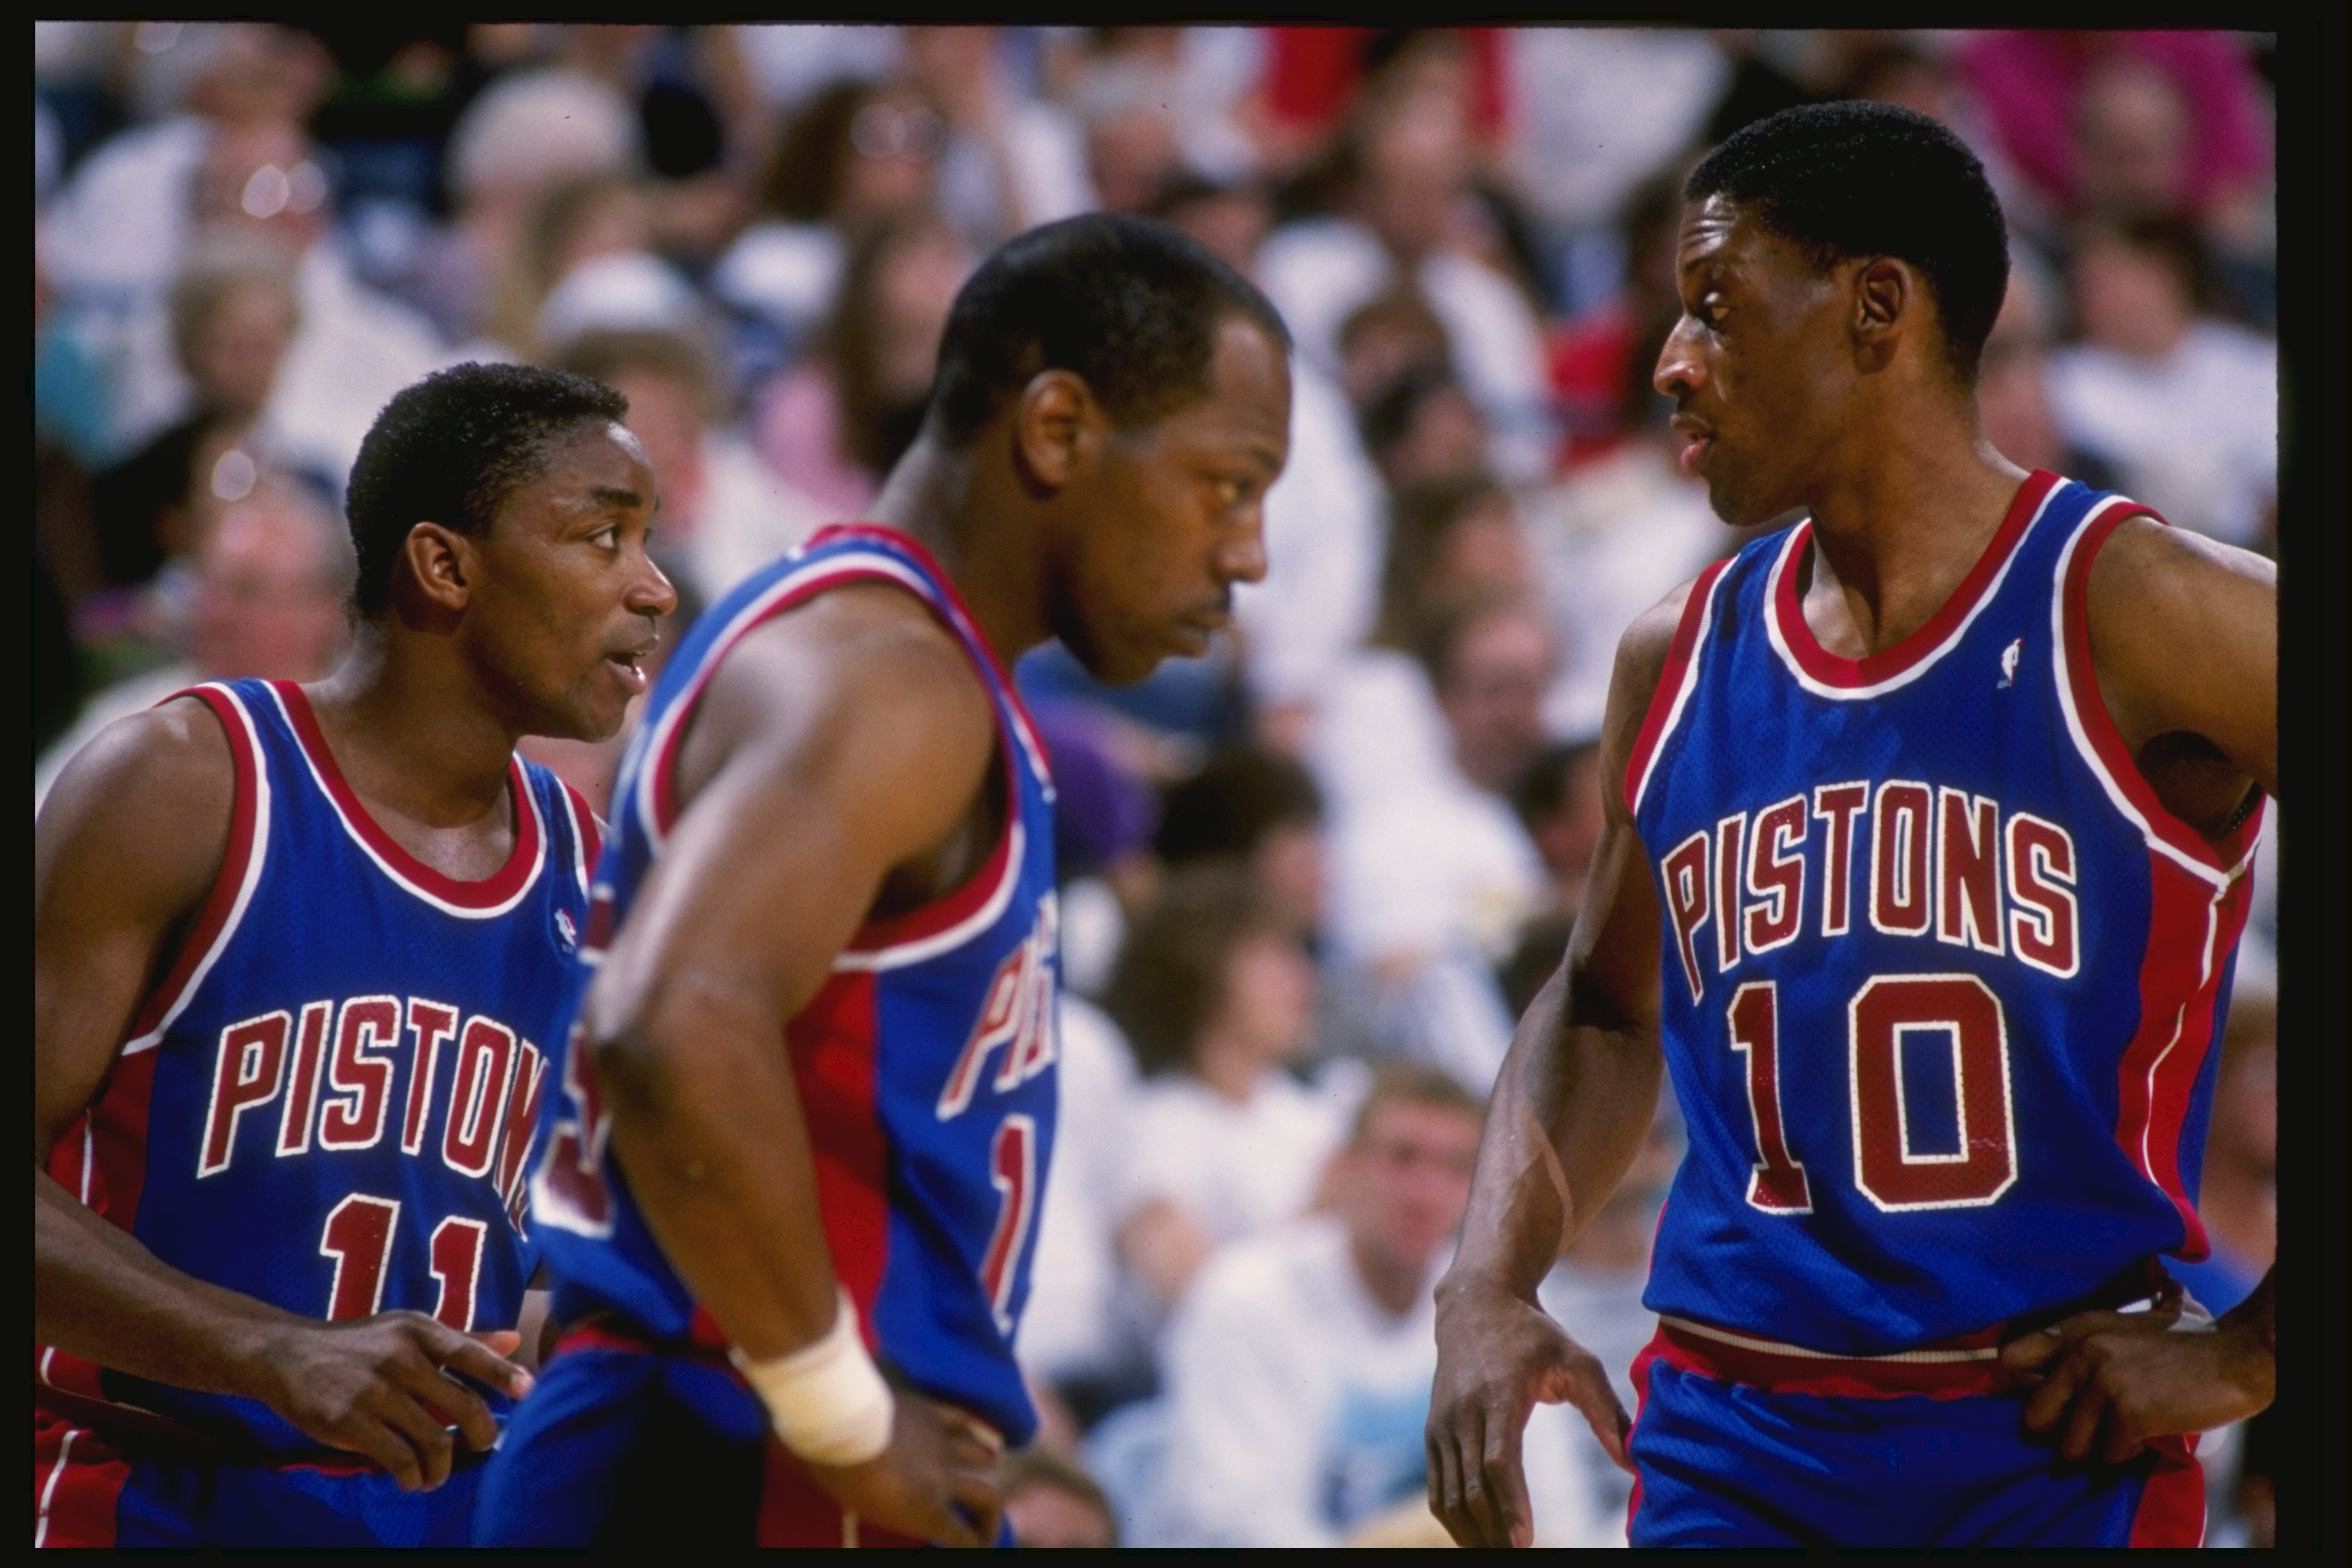 Vintage Detroit Pistons Isaiah Thomas 11 Basketball NBA 